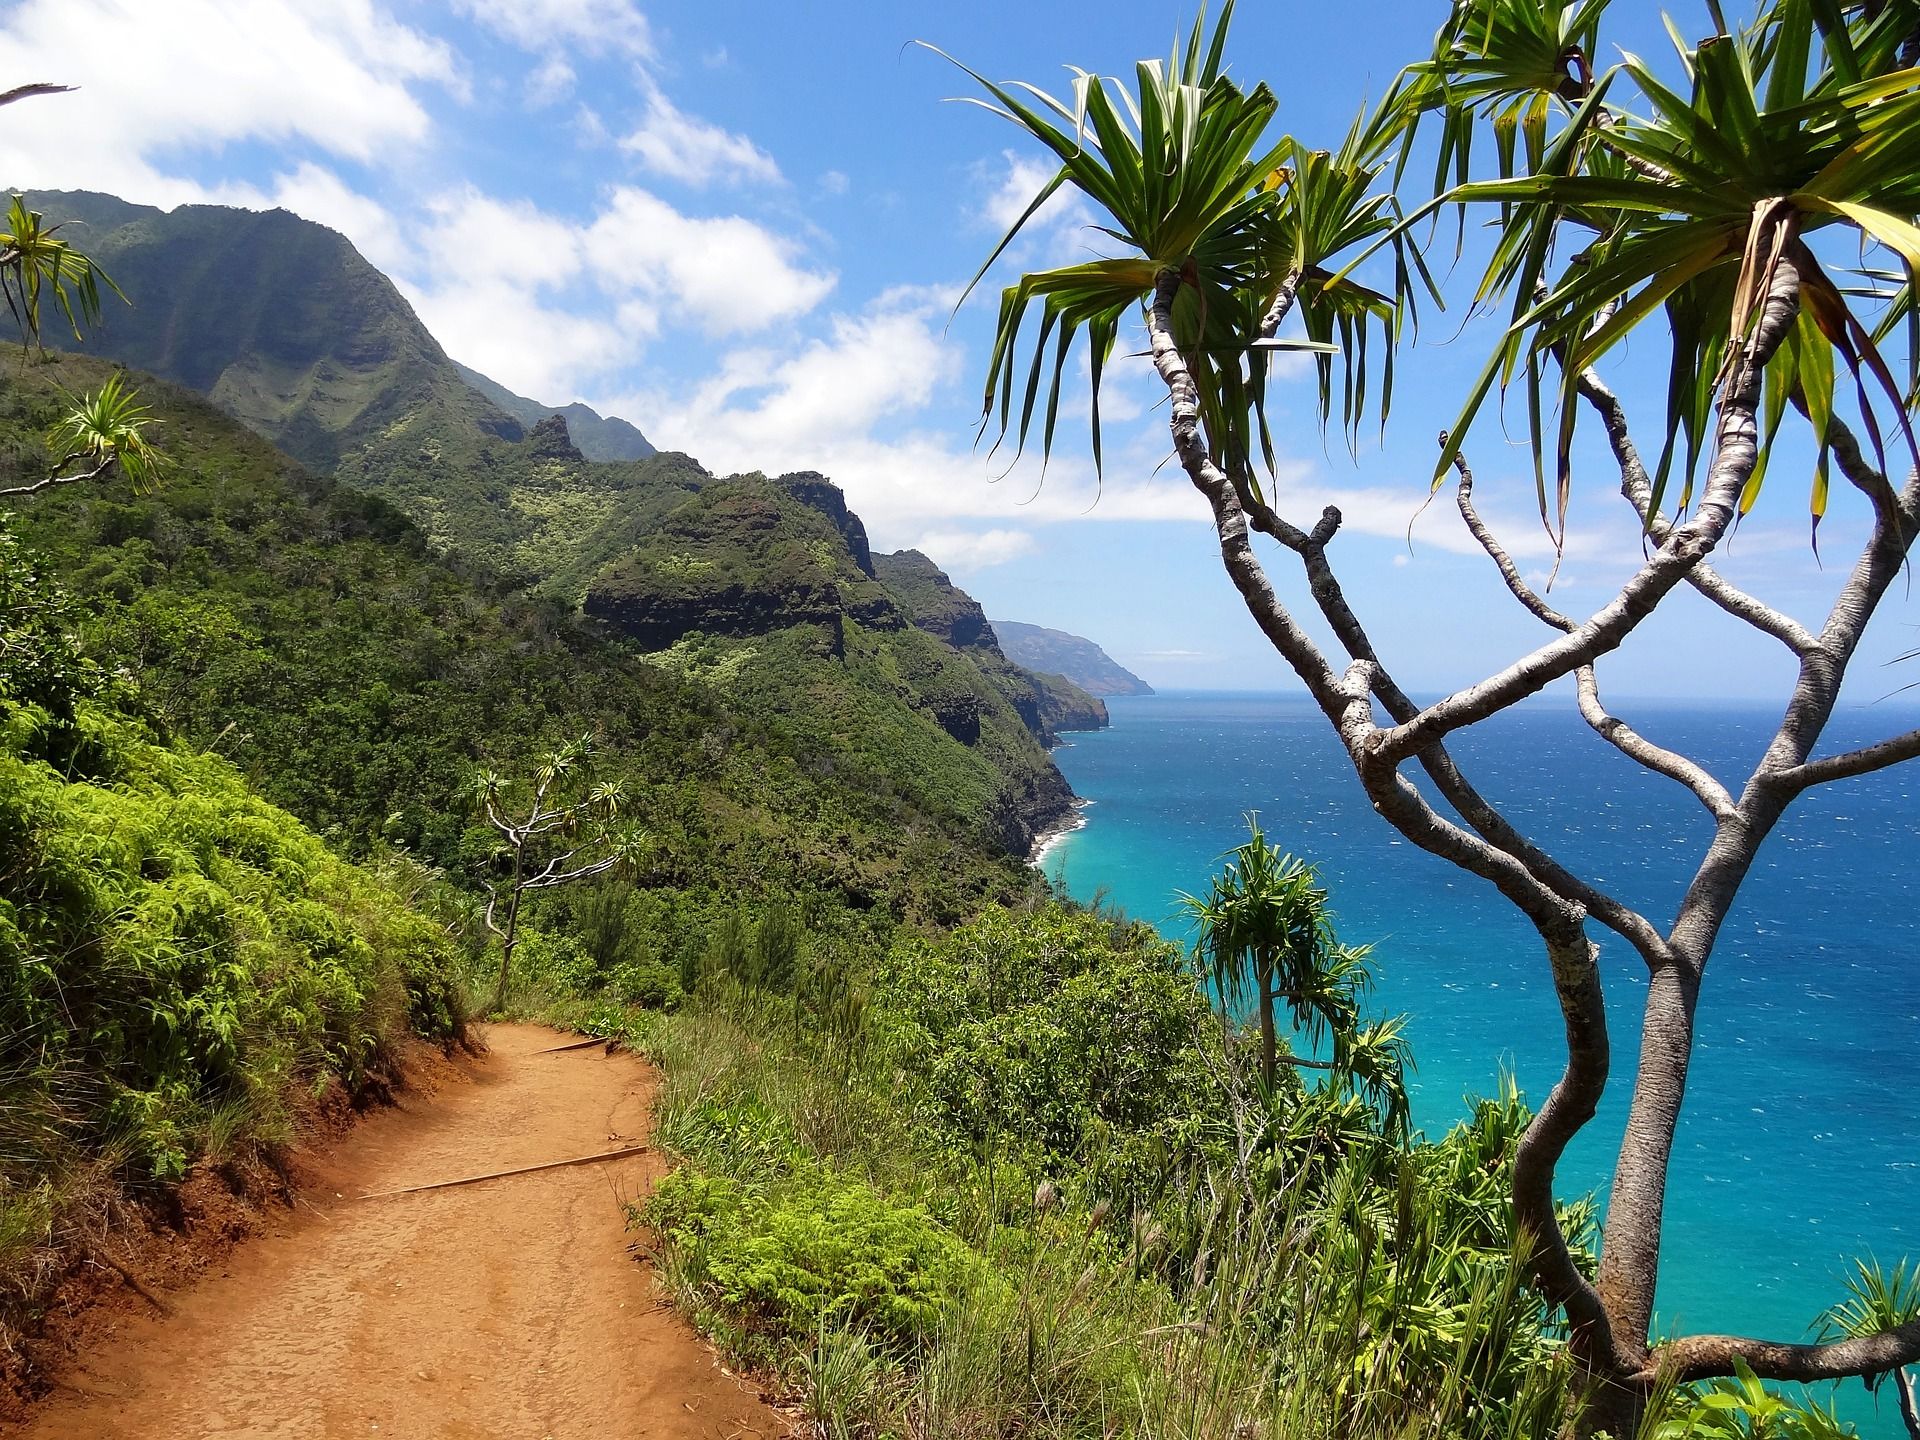 Go off the beaten path in Hawaii